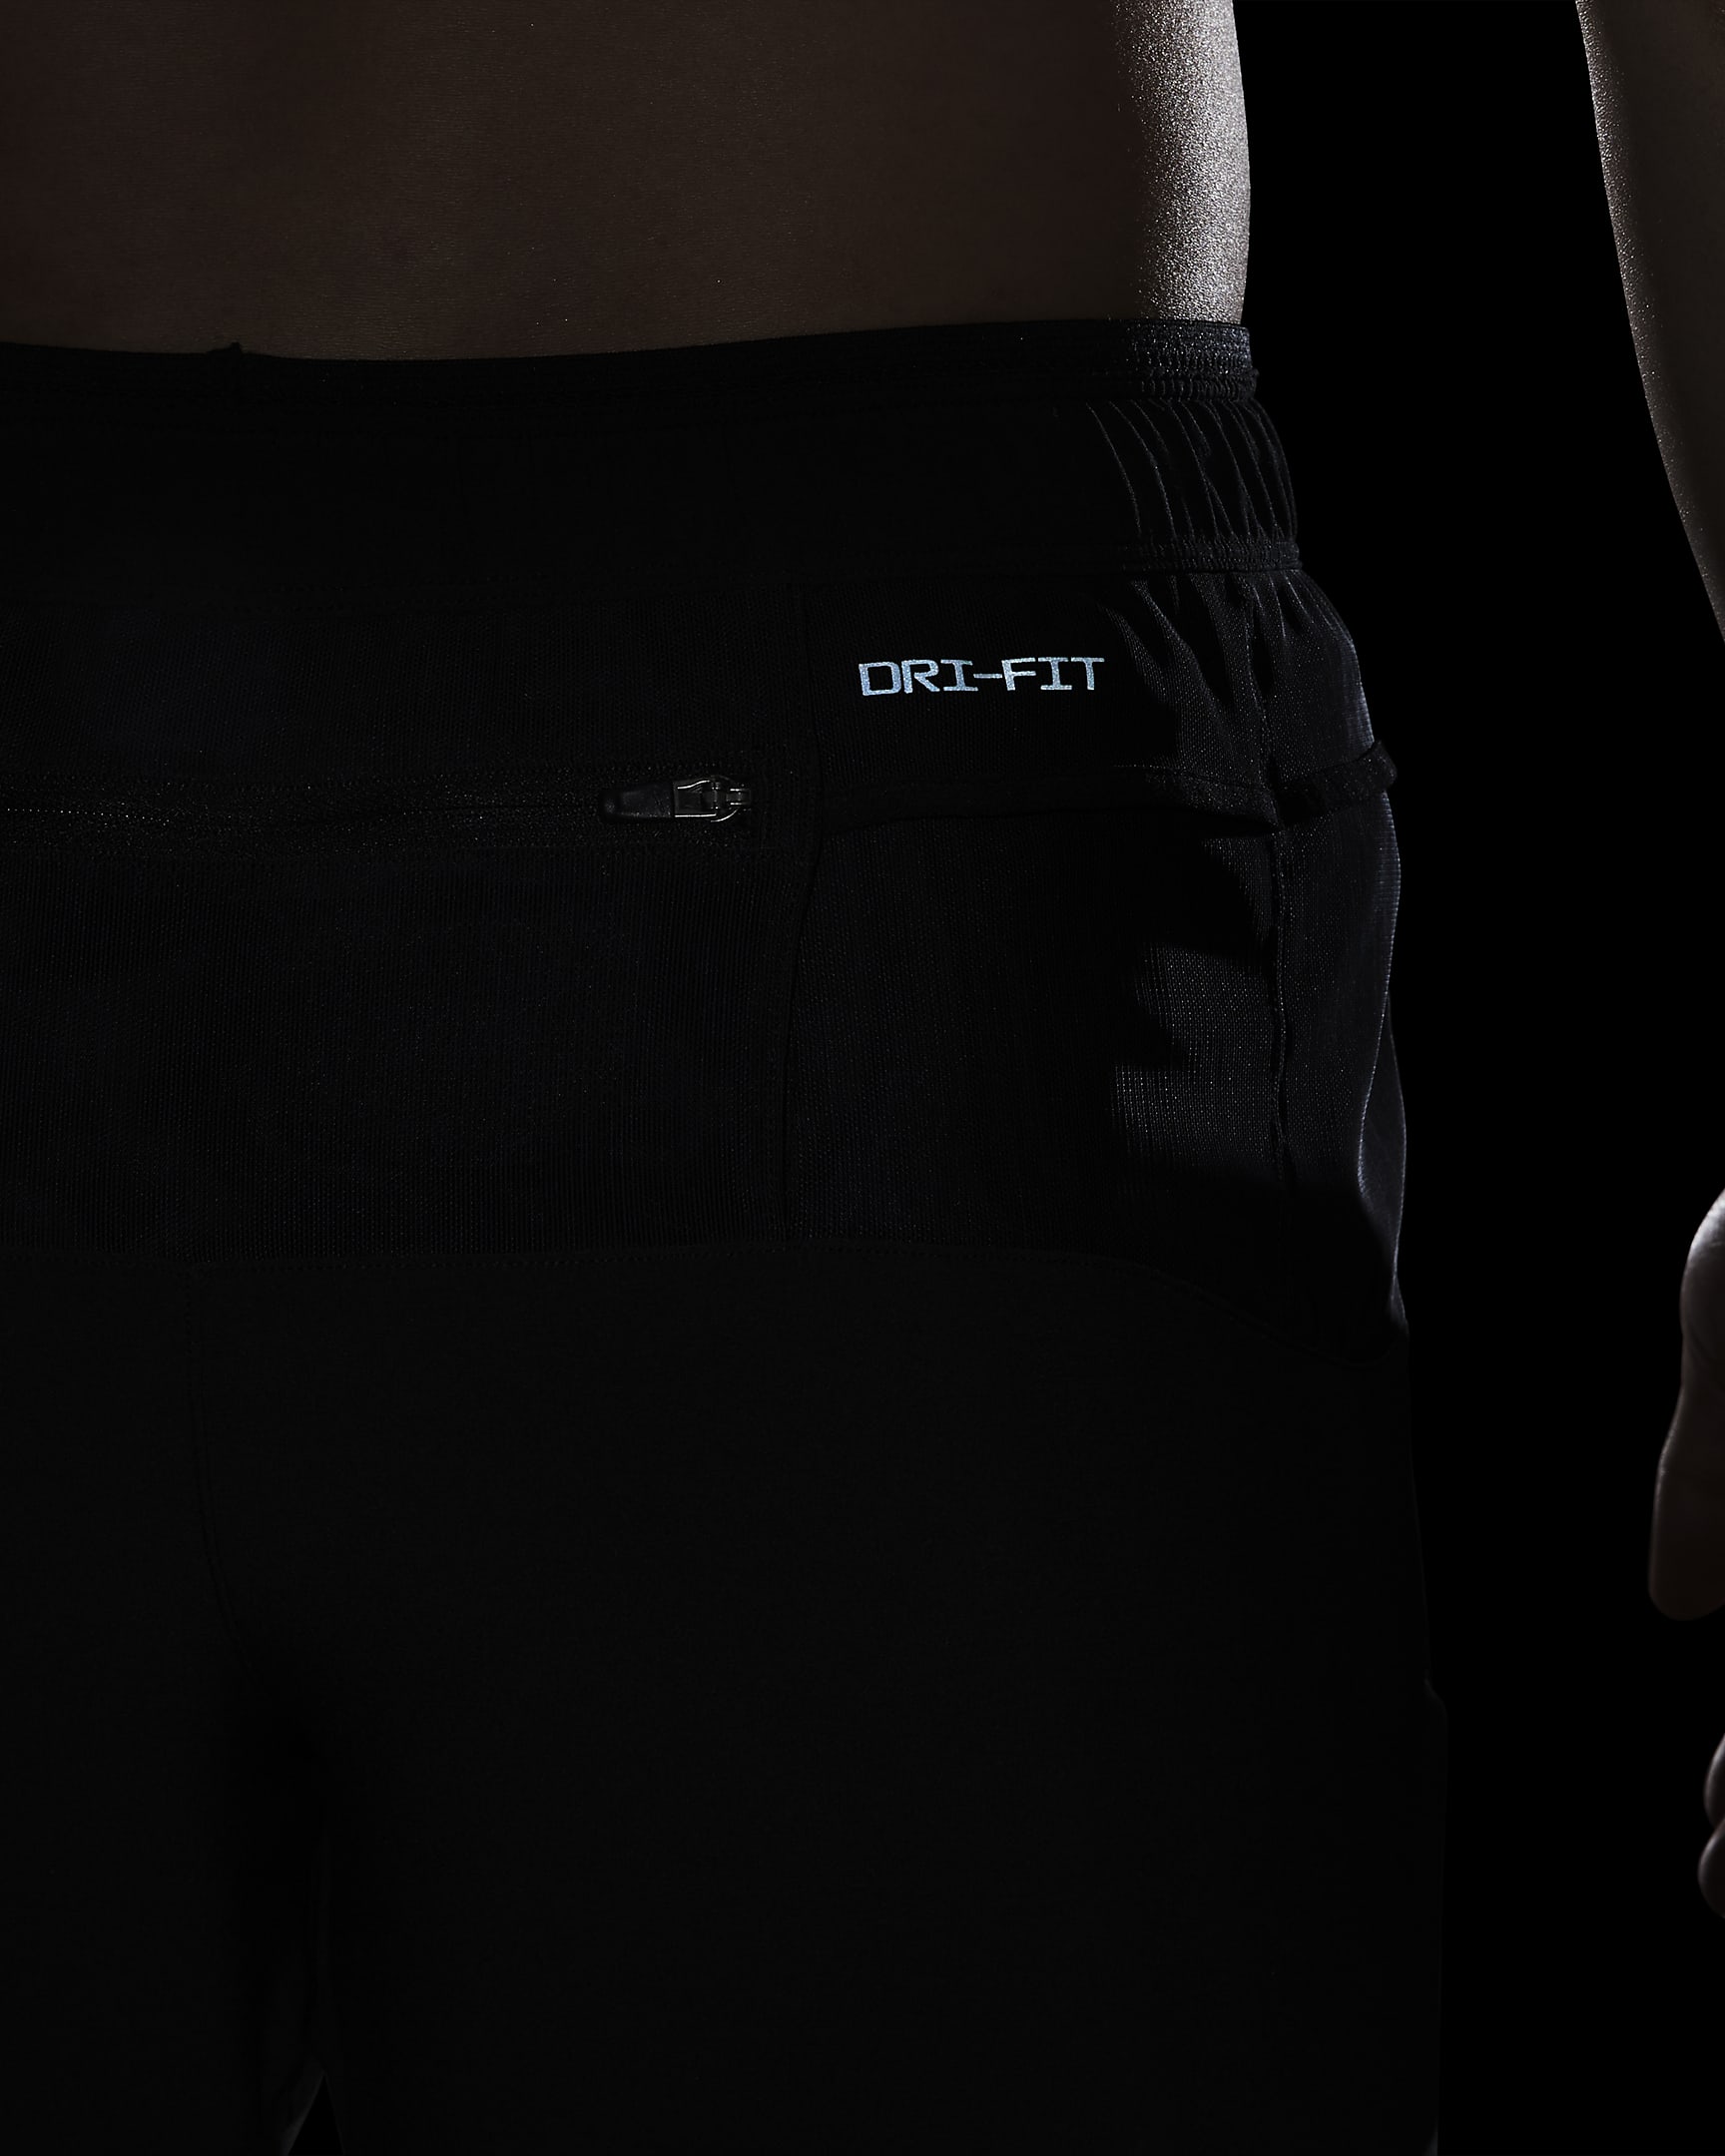 Nike Dri-FIT Running Division Phenom Men's Slim-Fit Running Trousers ...